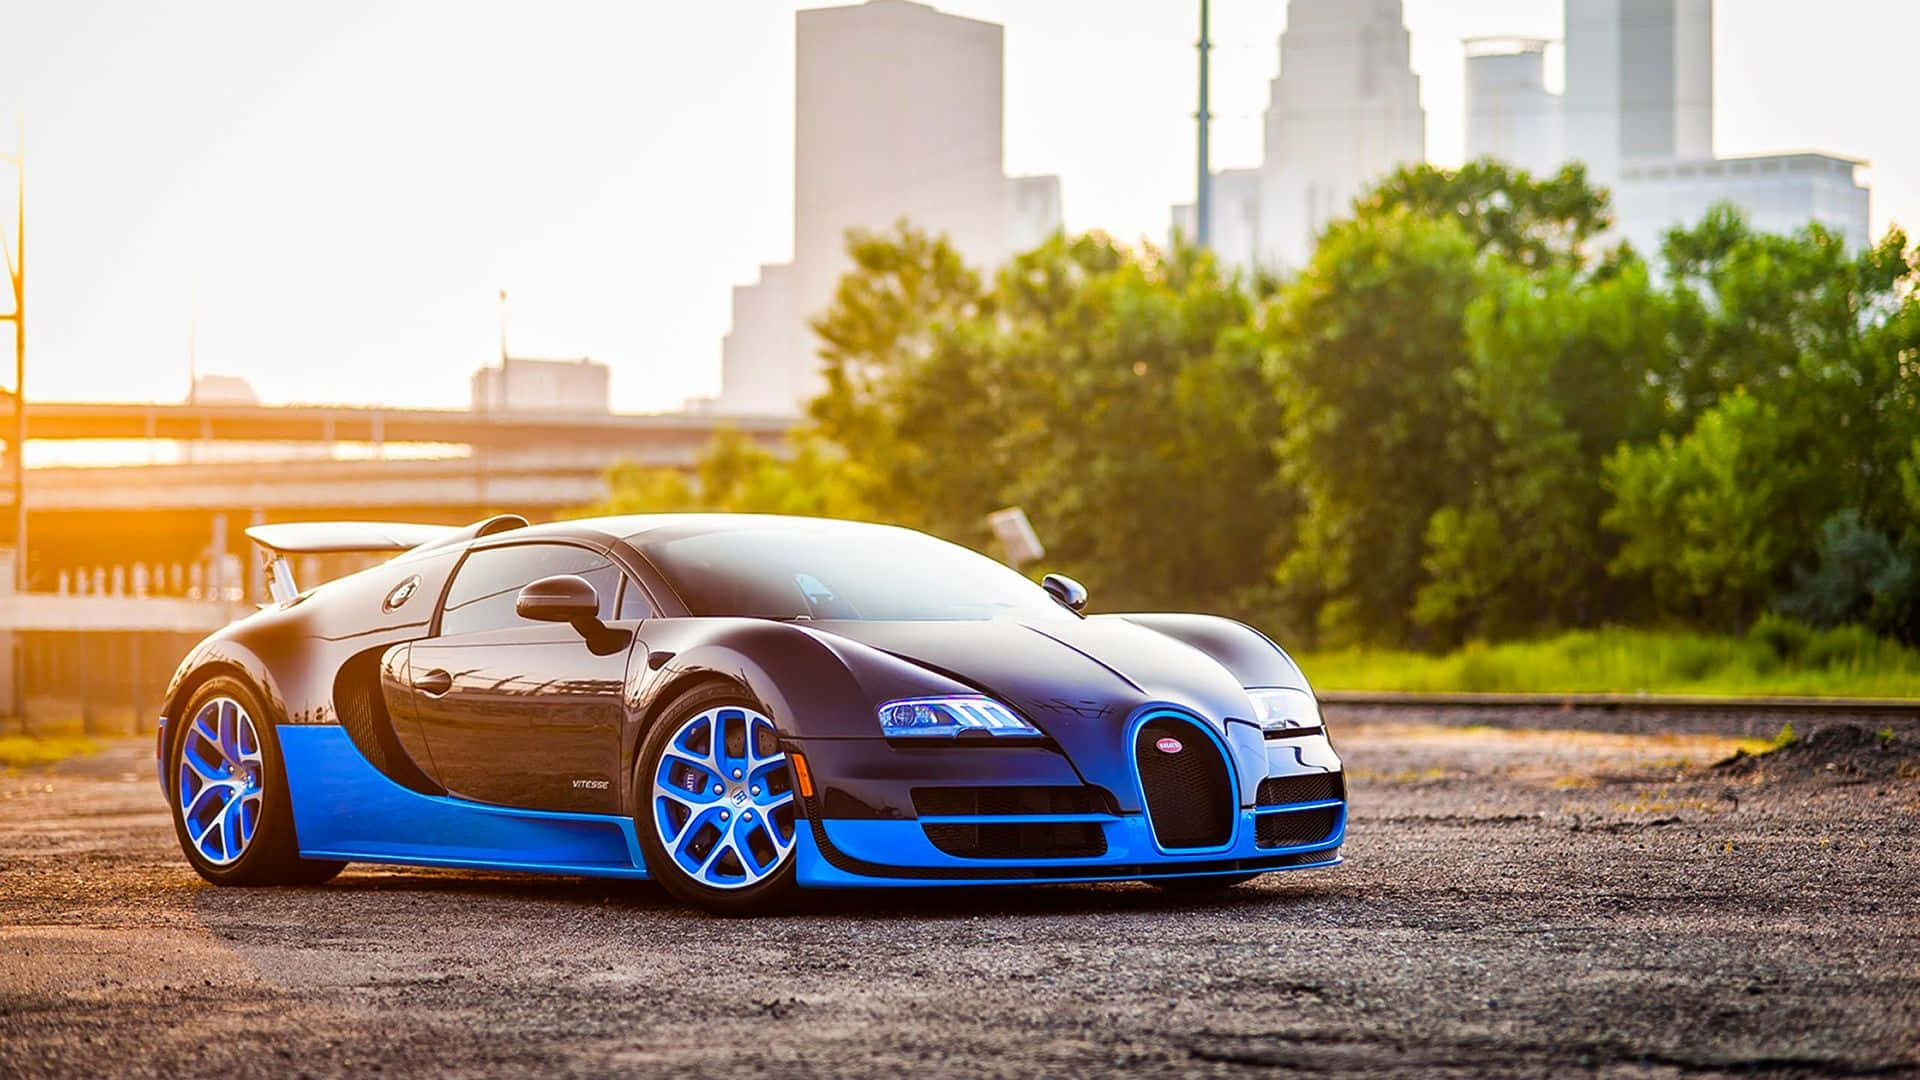 Sleek Bugatti Veyron in Breathtaking Scenery Wallpaper